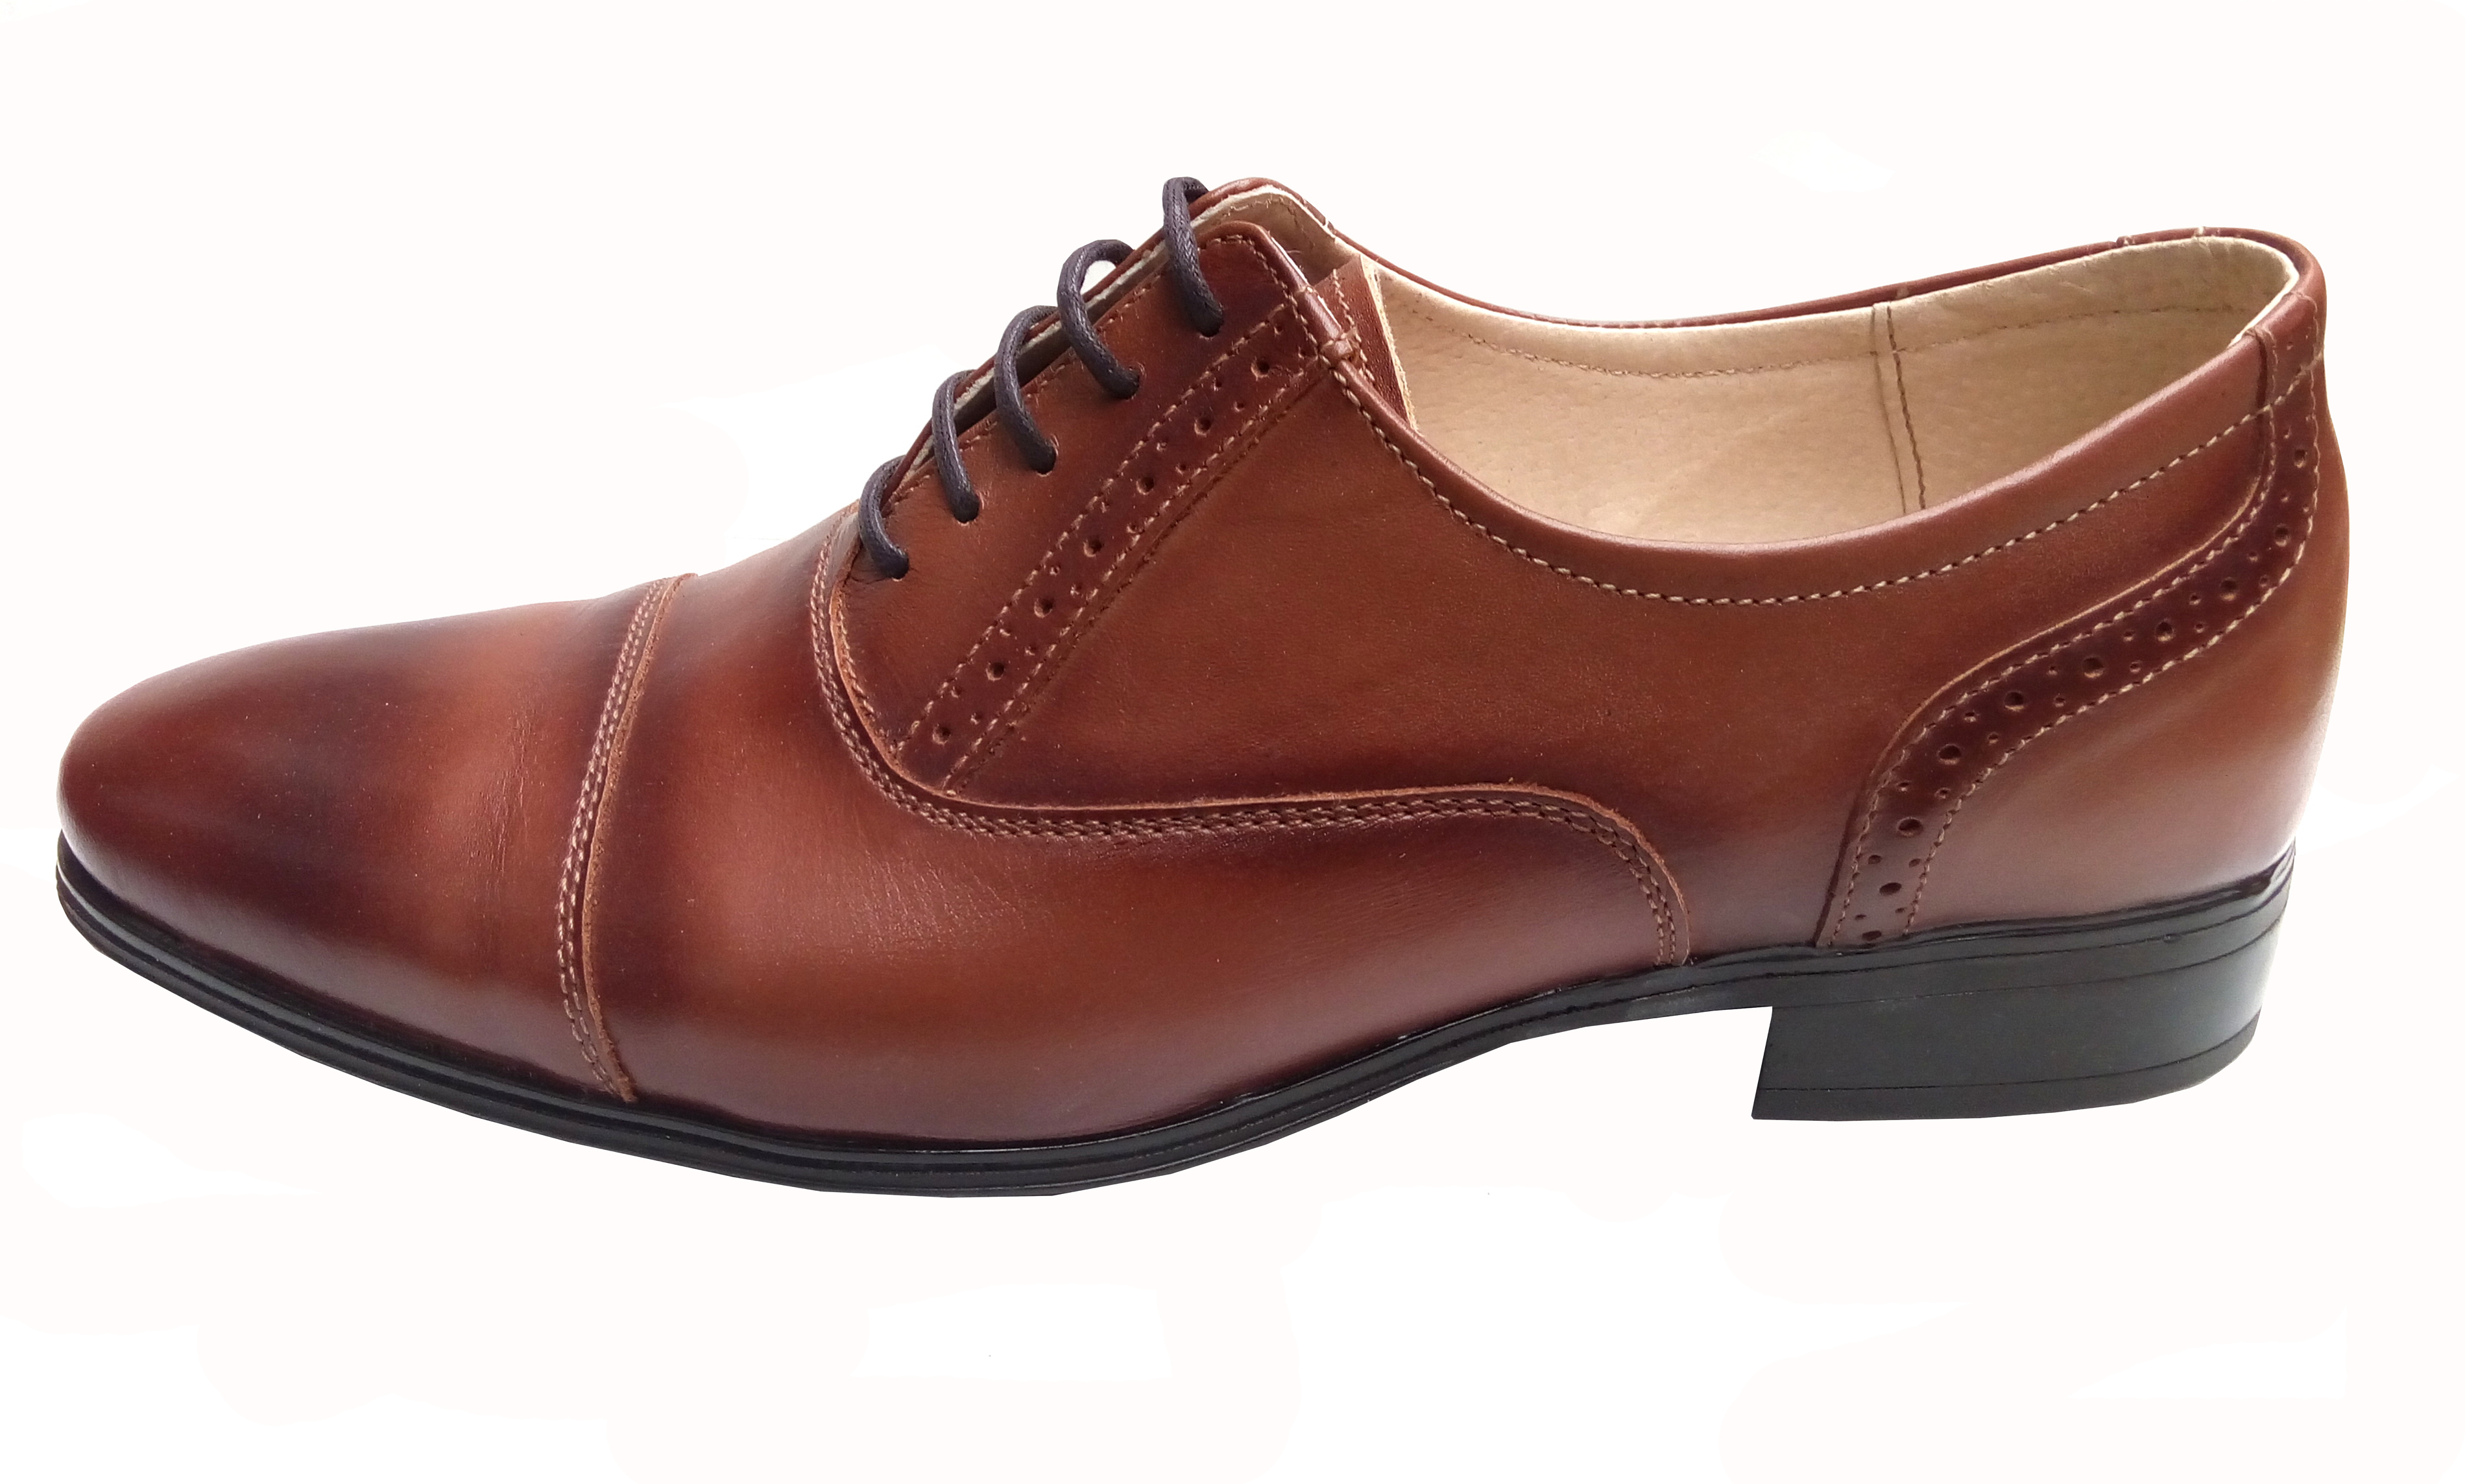 Pantofi barbati eleganti din piele naturala - BVSM16